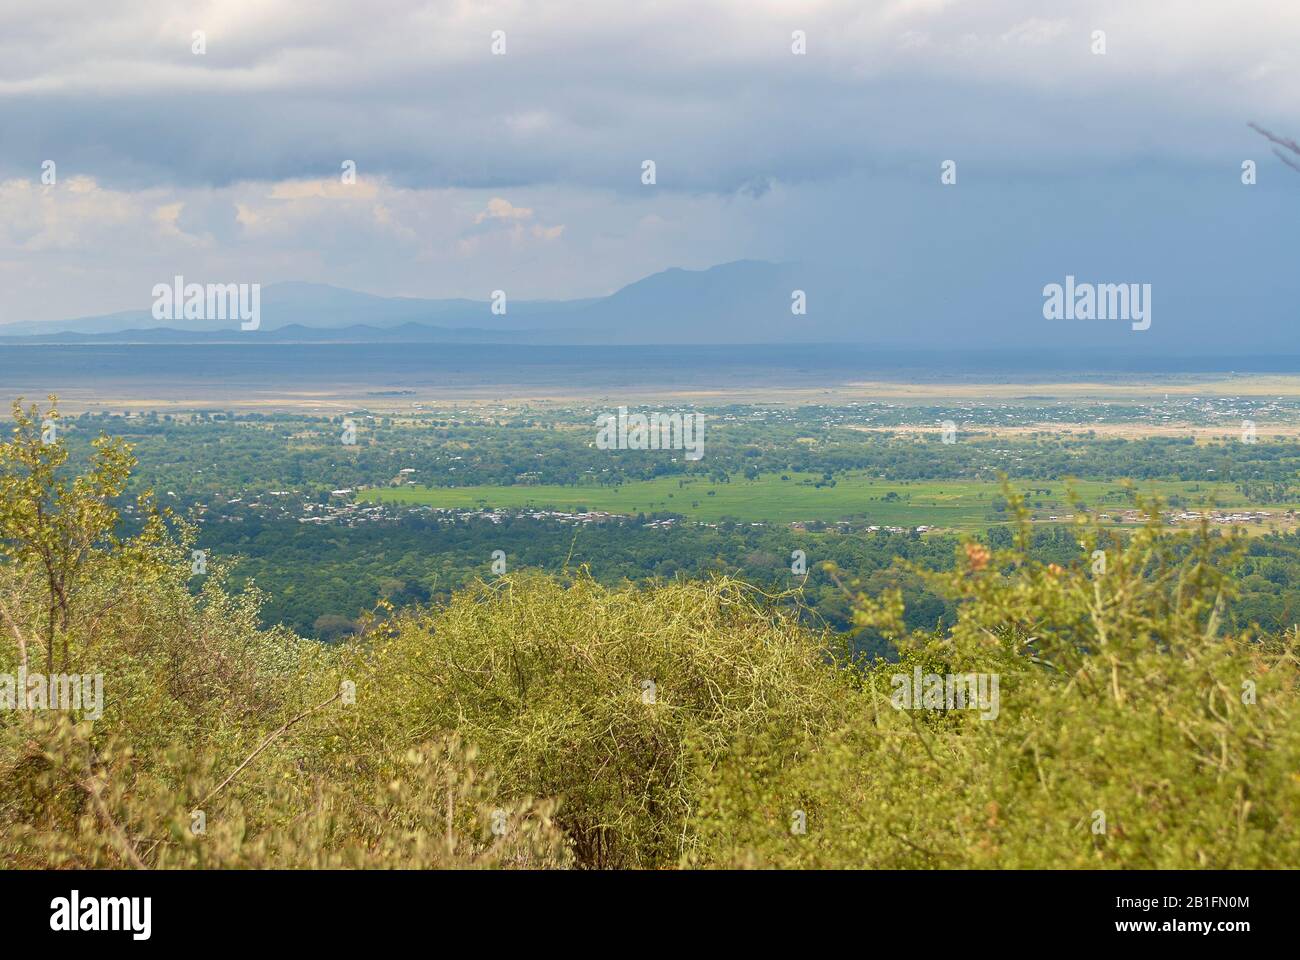 The small town of Mto wa Mbu, seen from the Ngorongoro escarpment road Stock Photo